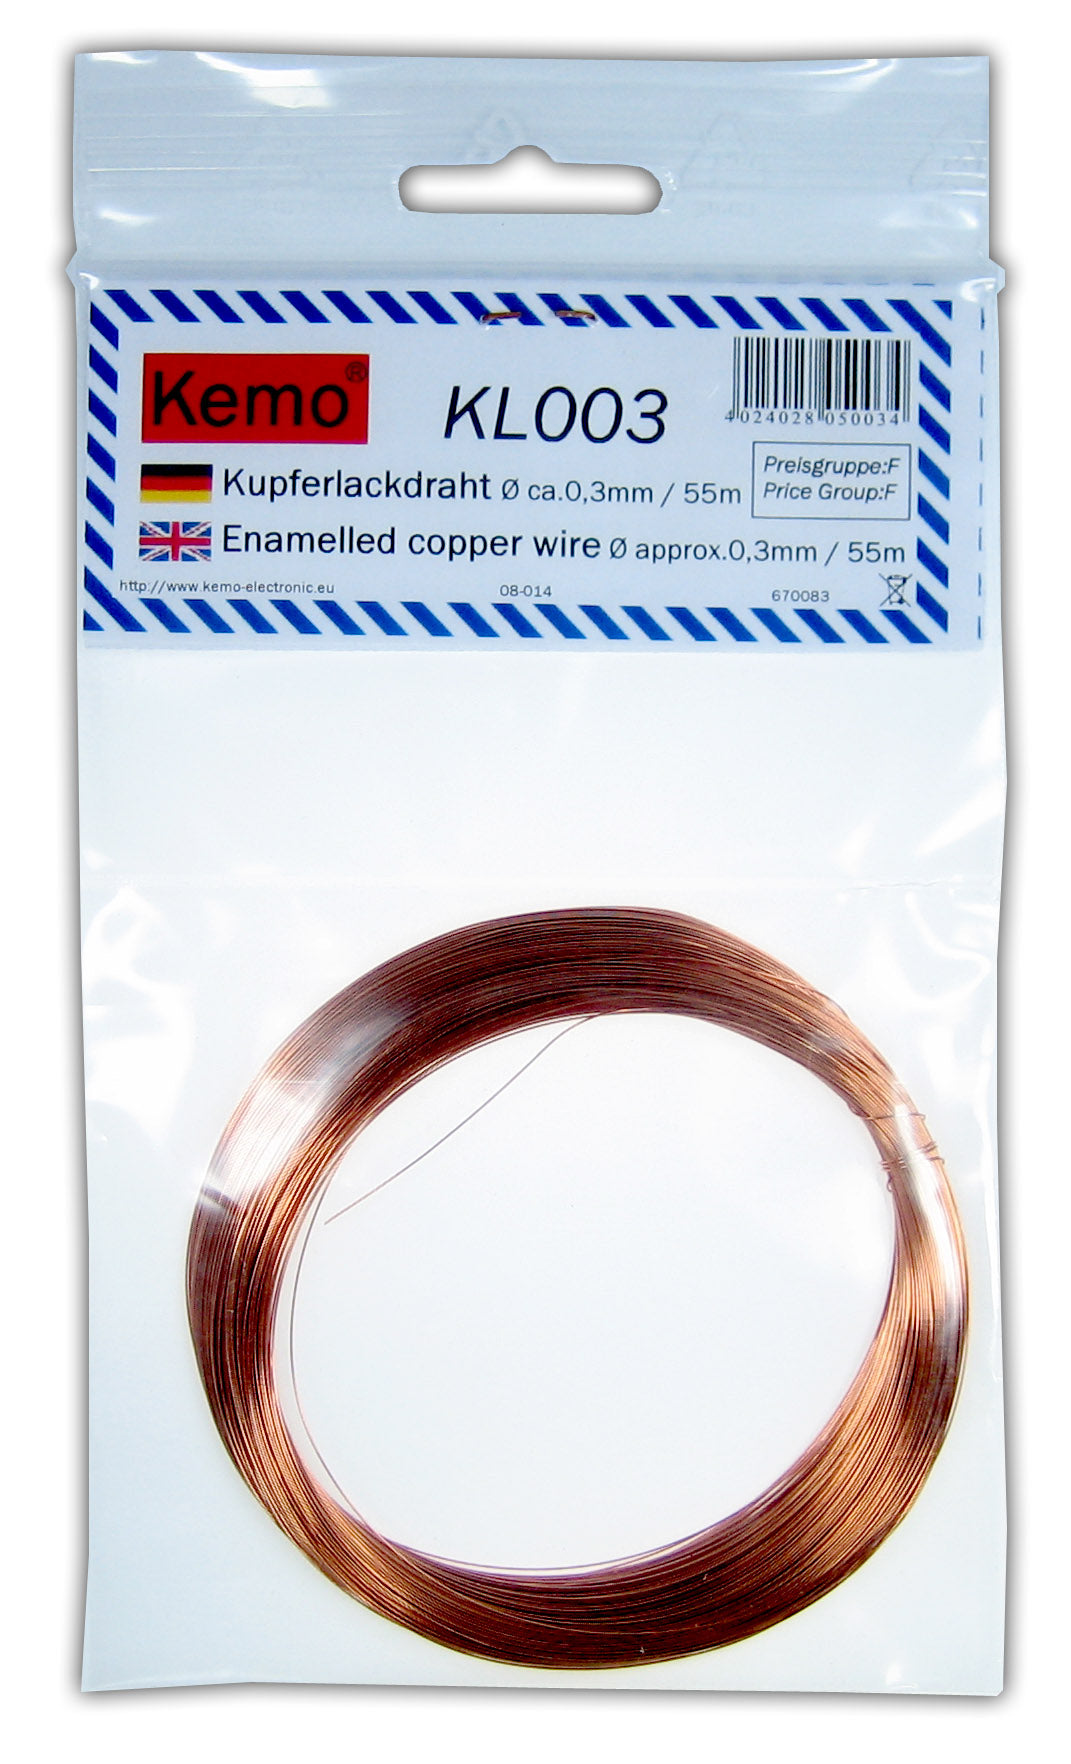 Kemo KL003 Enamelled Copper Wire  approx. 0.3 mm